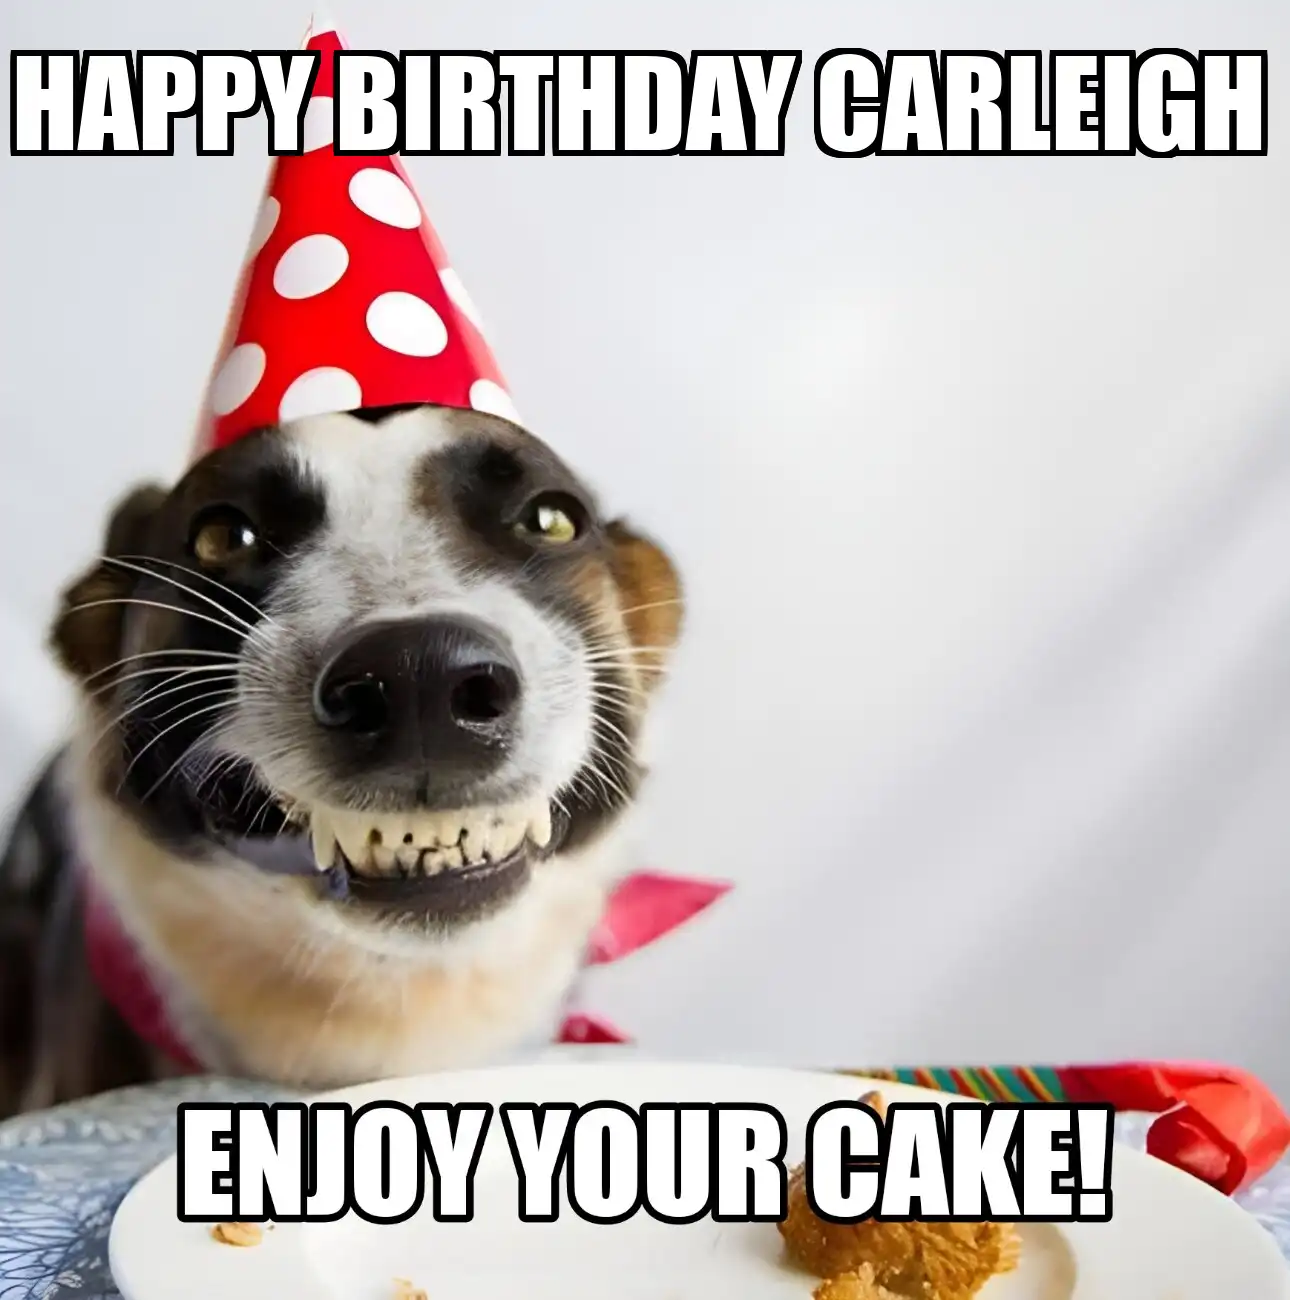 Happy Birthday Carleigh Enjoy Your Cake Dog Meme